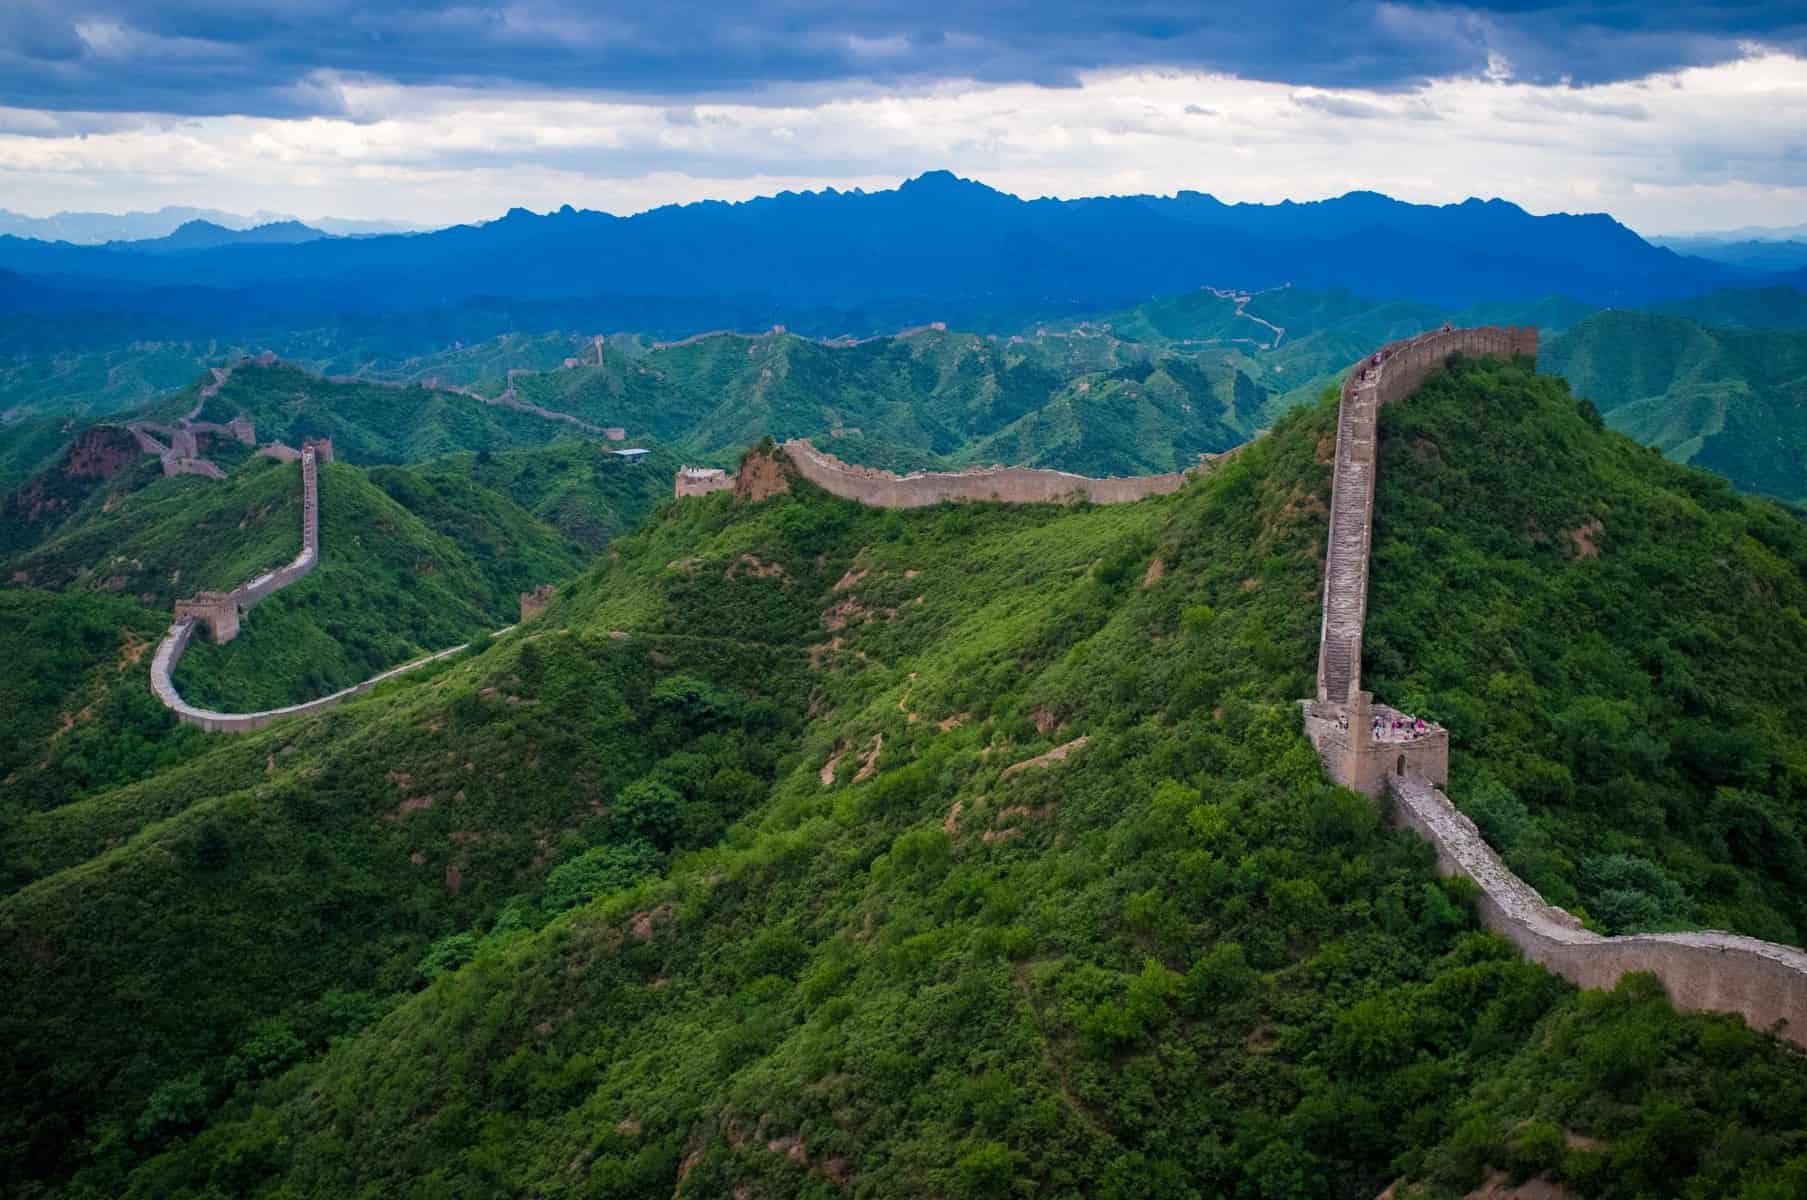 The Great Wall of China at Jinshanling. Click to zoom in. Photo by Severin Stalder